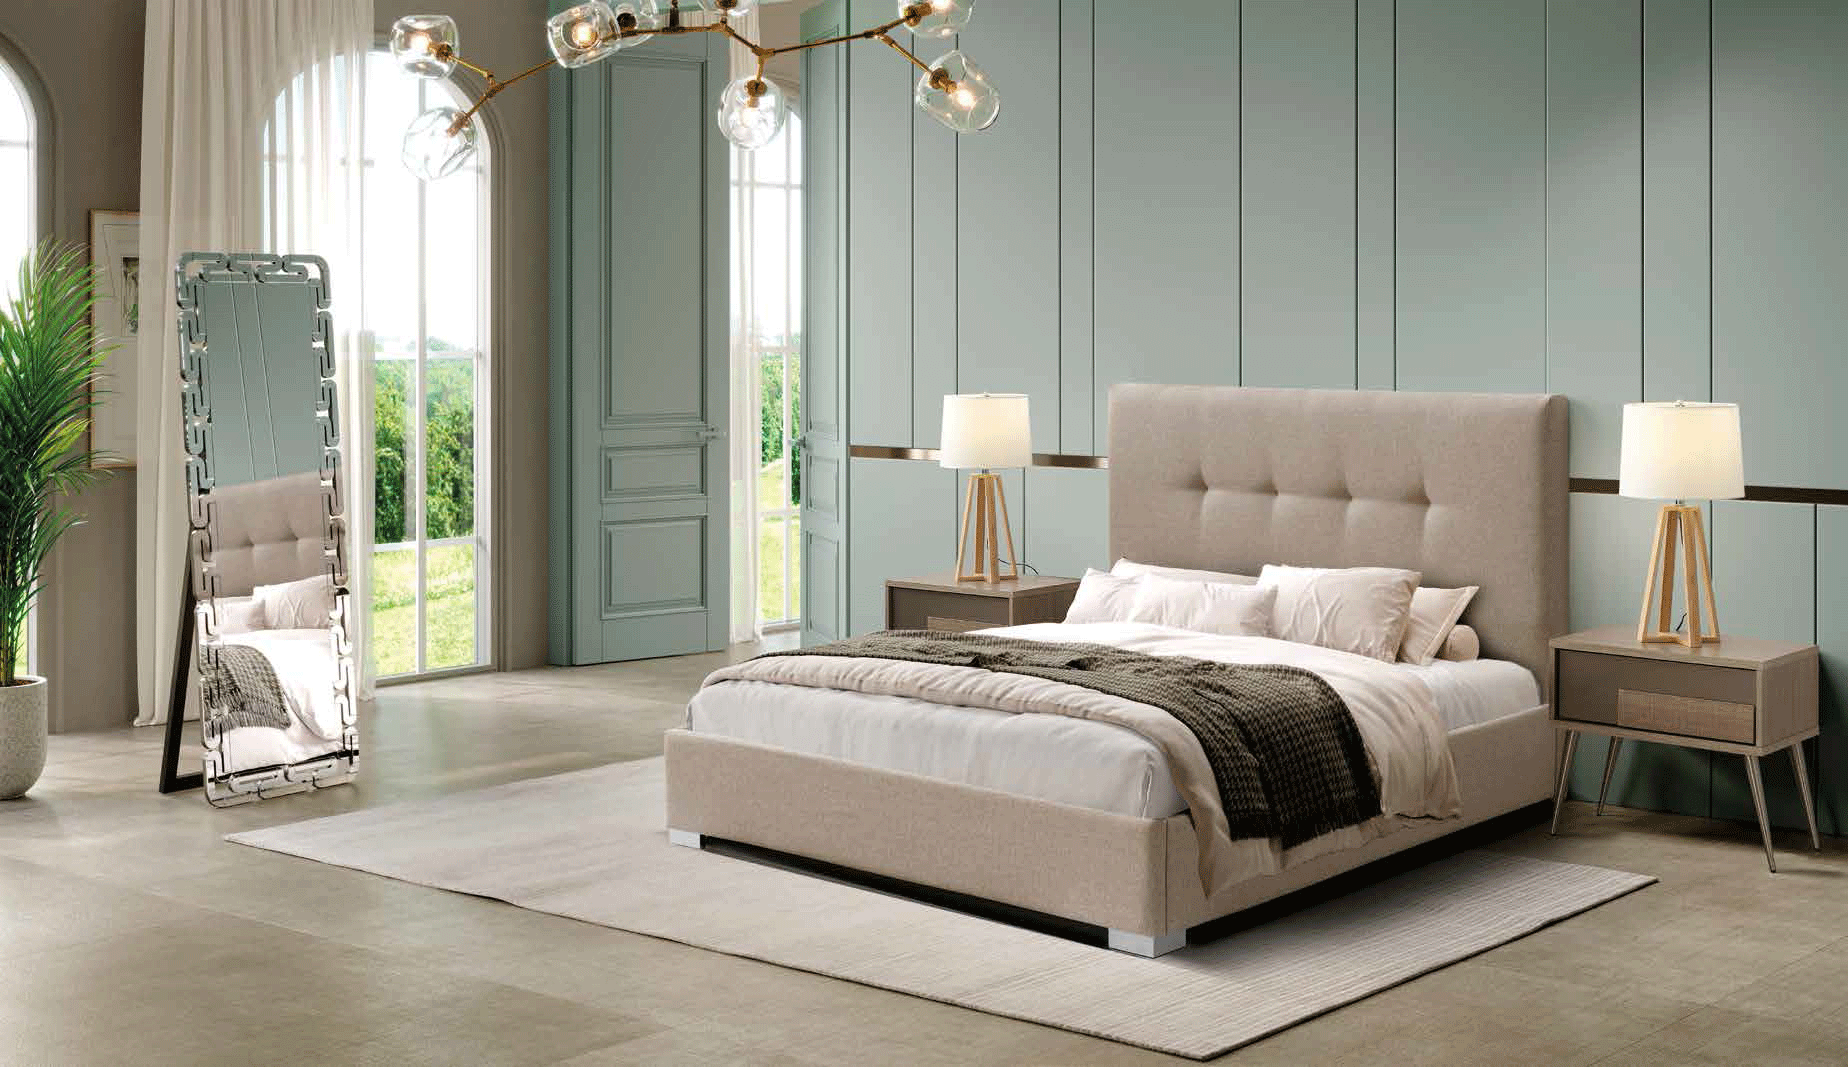 Bedroom Furniture Mattresses, Wooden Frames 404 Rita, M-162, E-417, LT-8067-G1